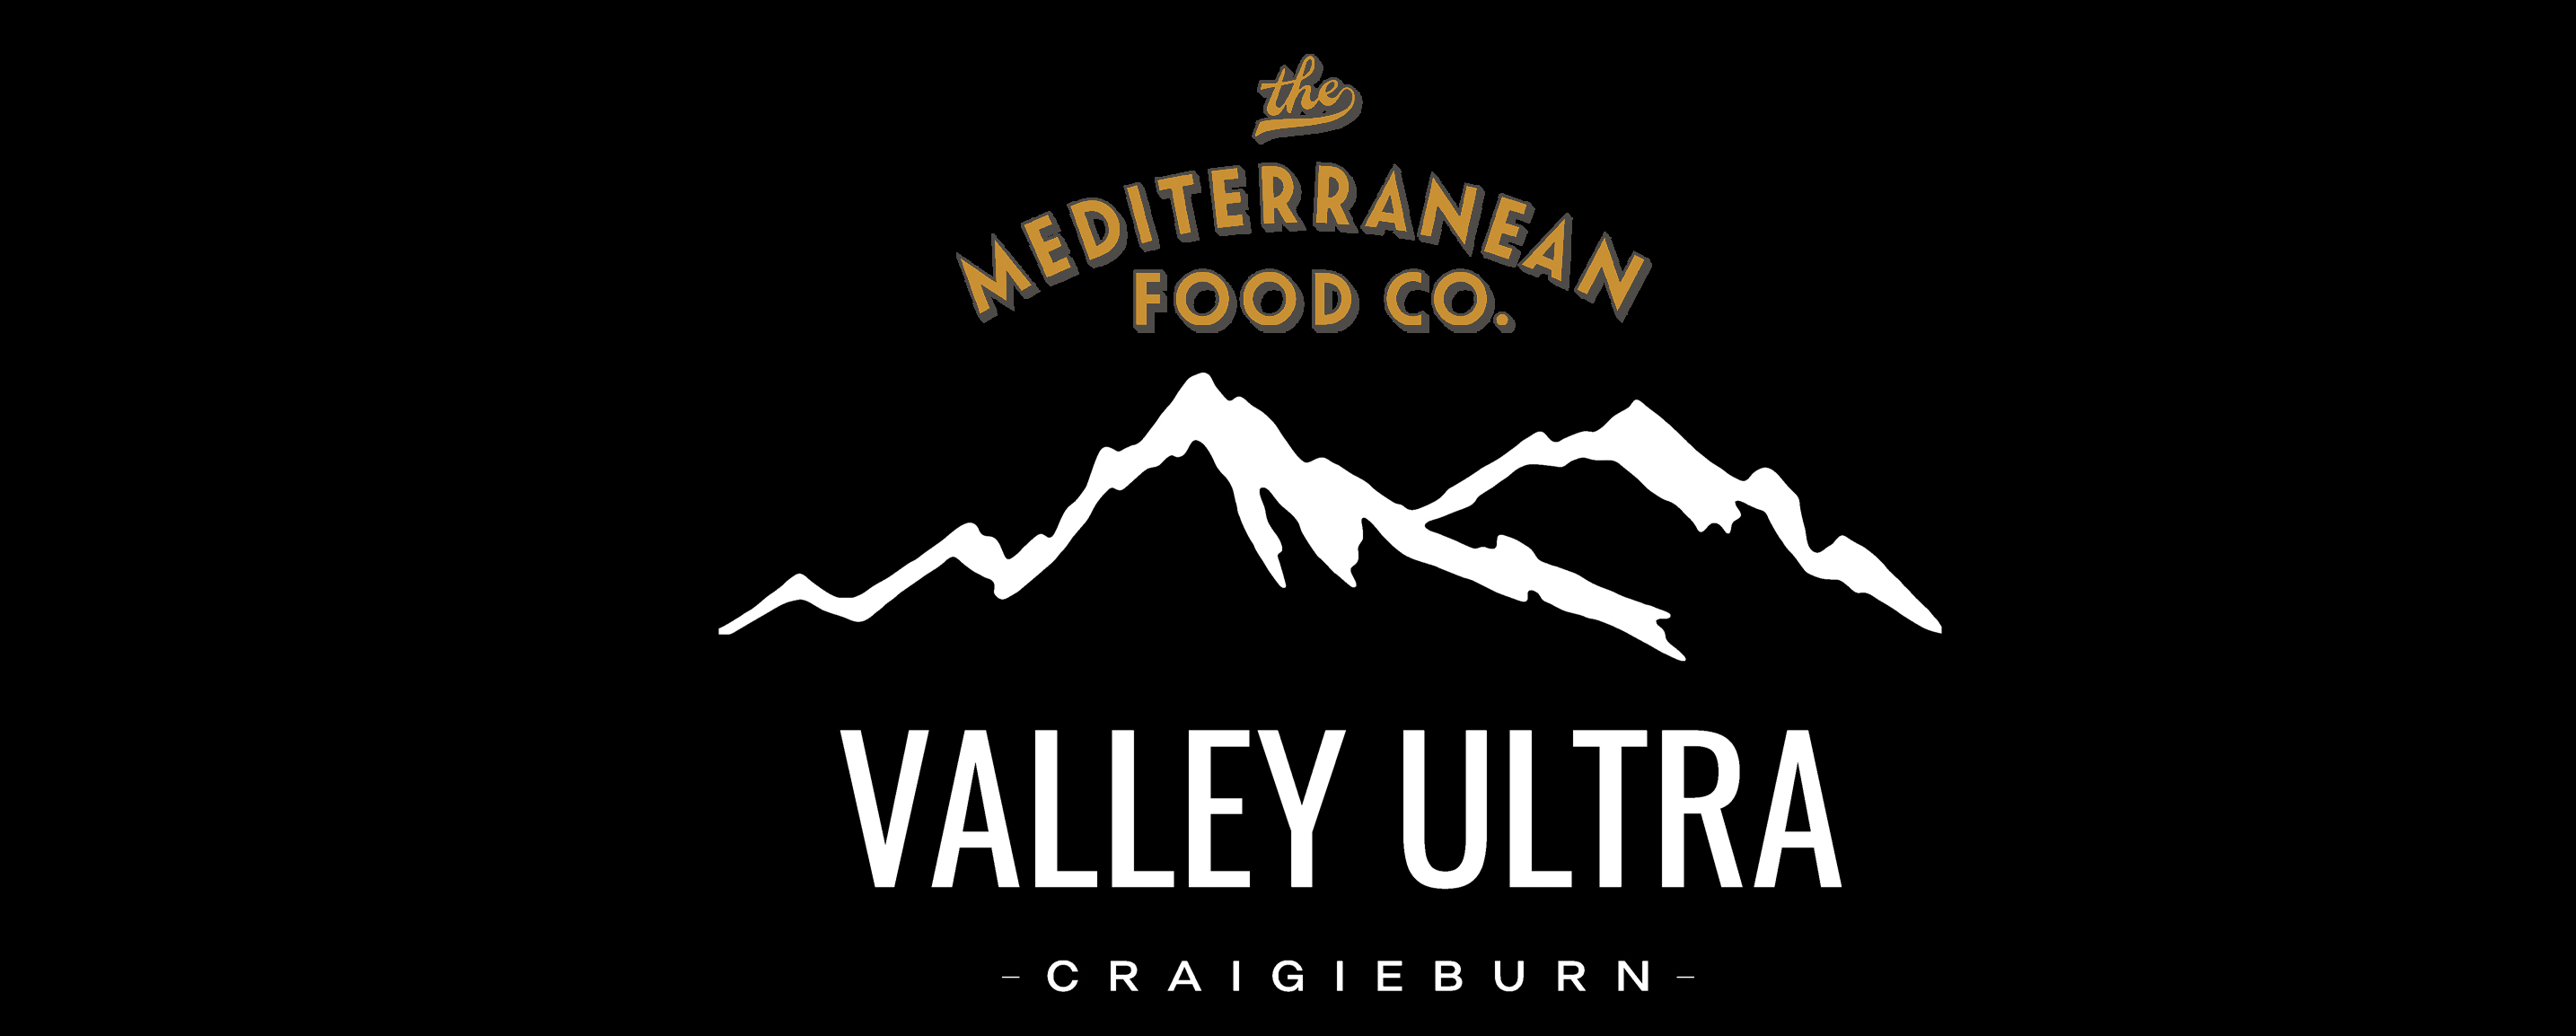 Mediterranean Food Co Valley Ultra Logo